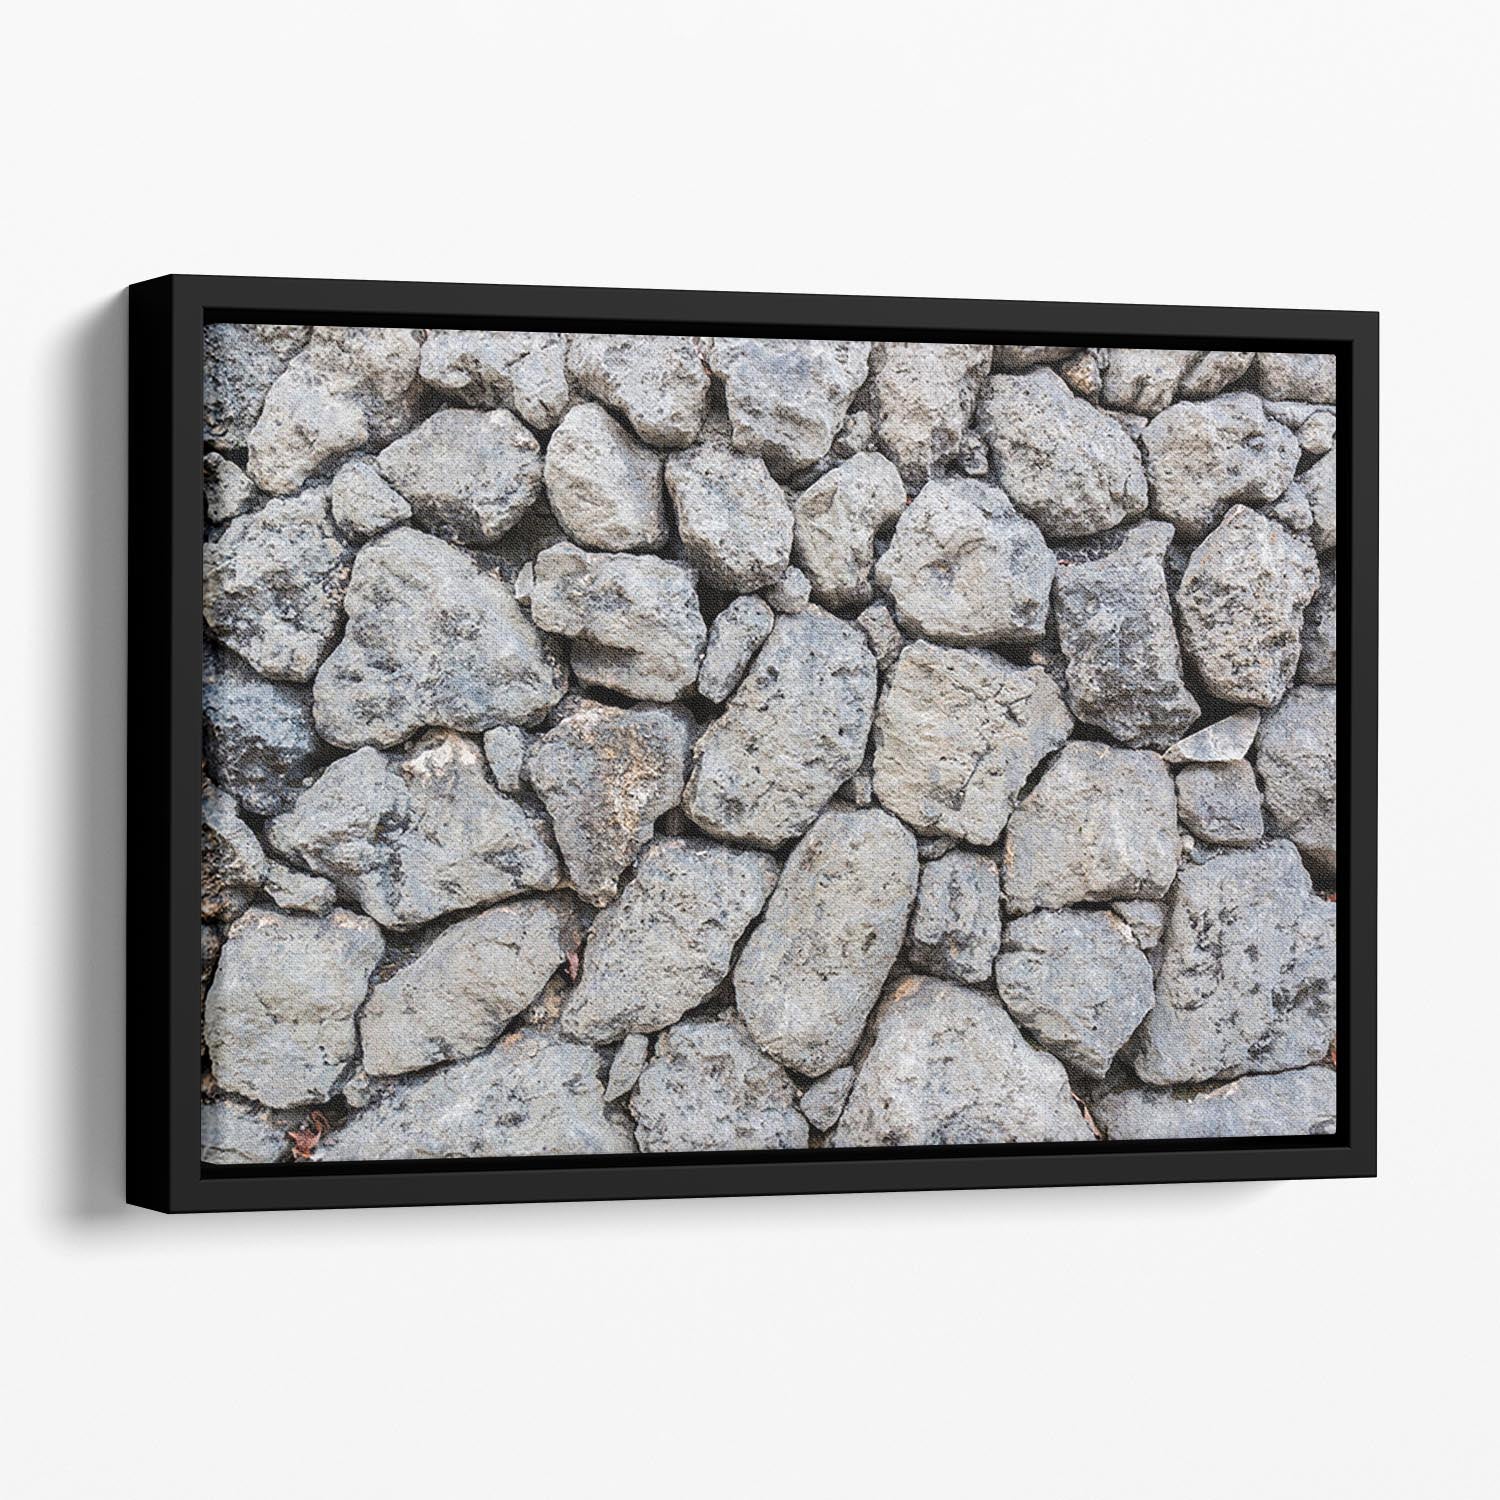 Rock wall texture Floating Framed Canvas - Canvas Art Rocks - 1